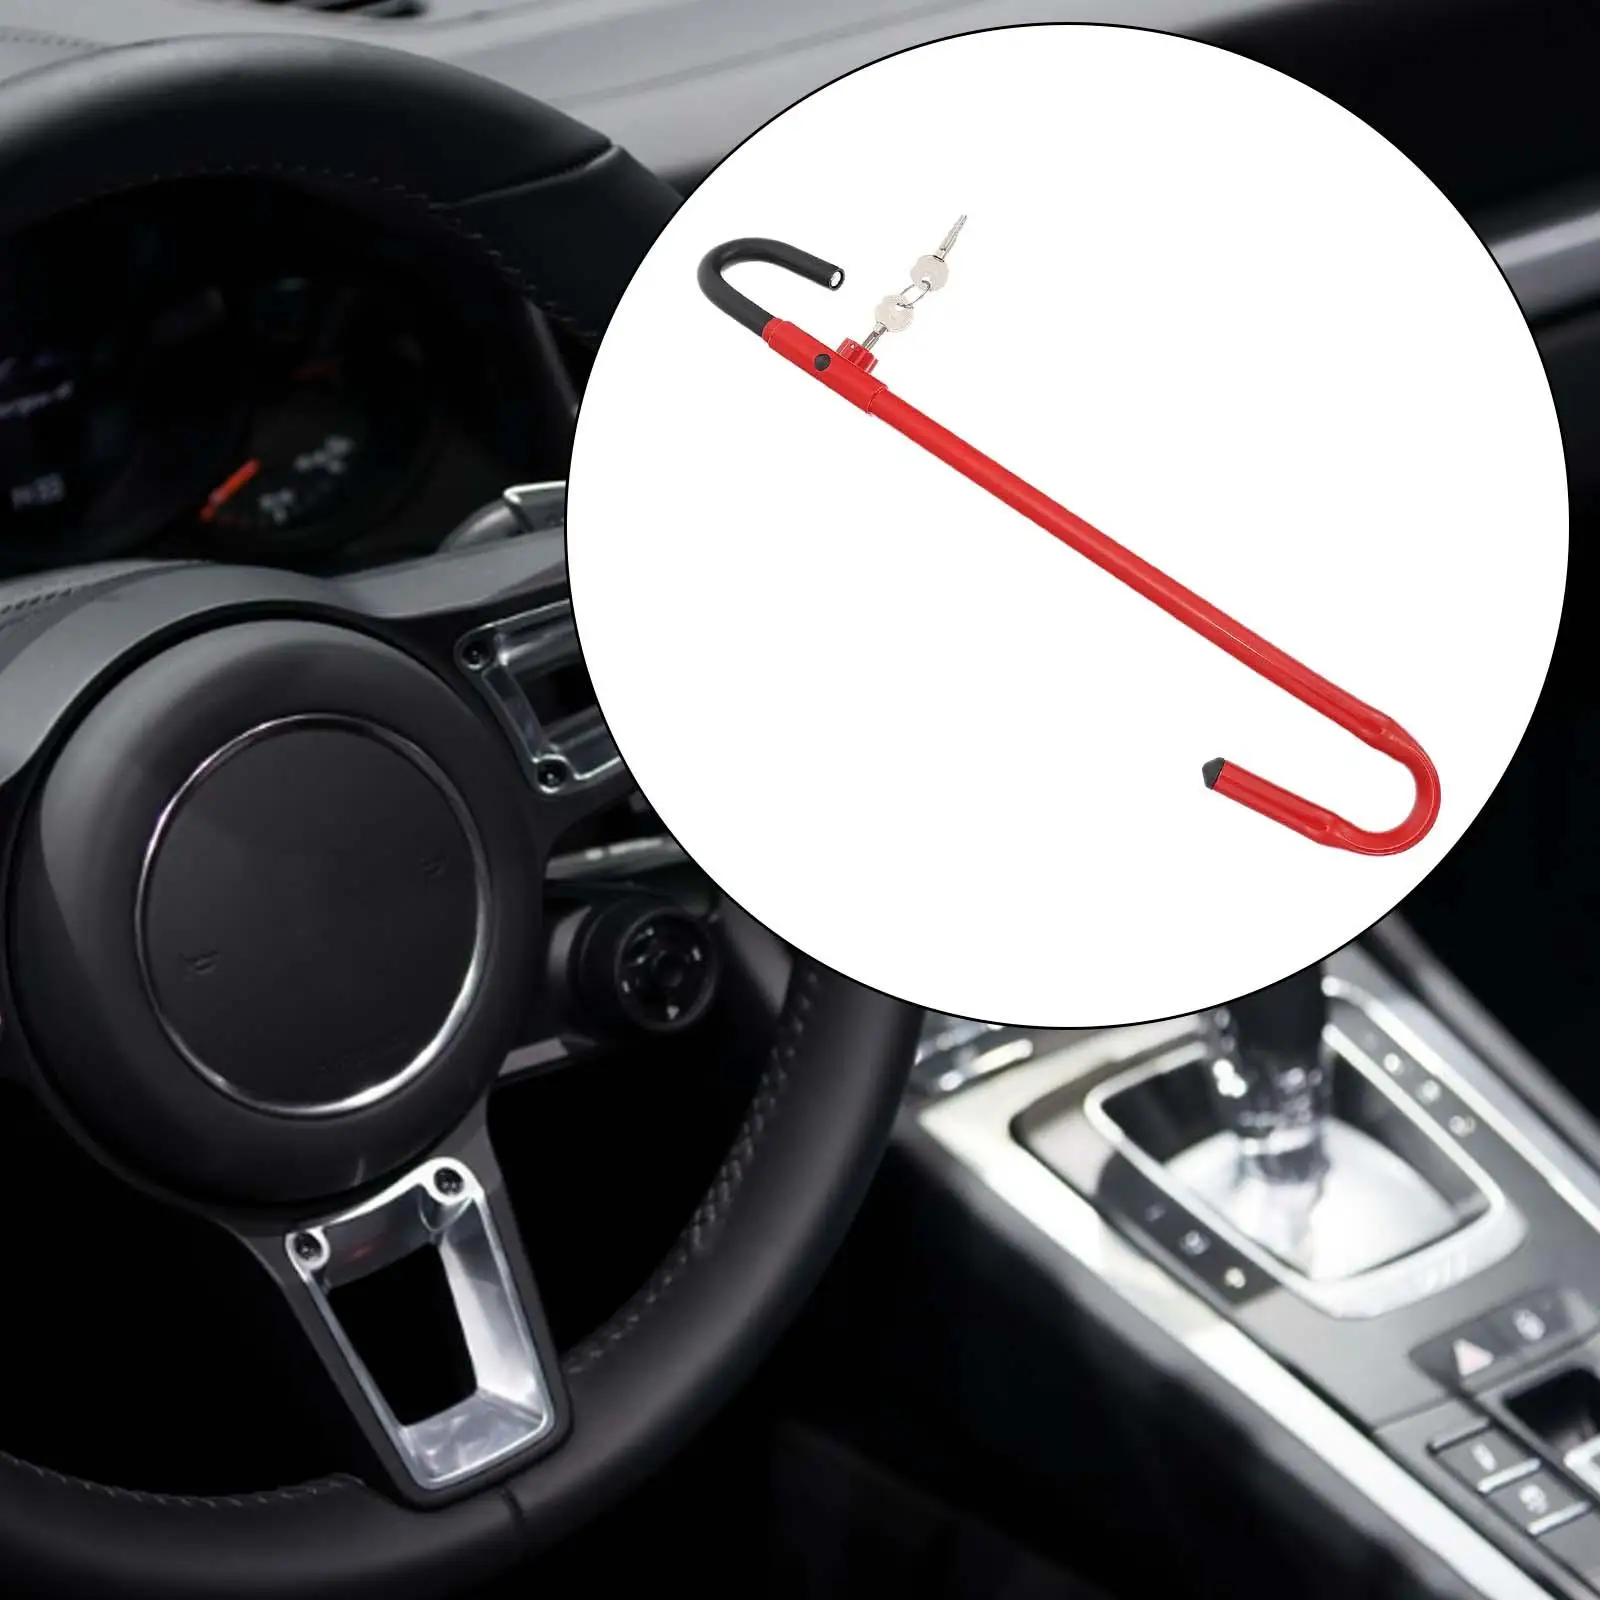 Car Steering Wheel to Brake Pedal Lock Security Lock for SUV Car Trucks